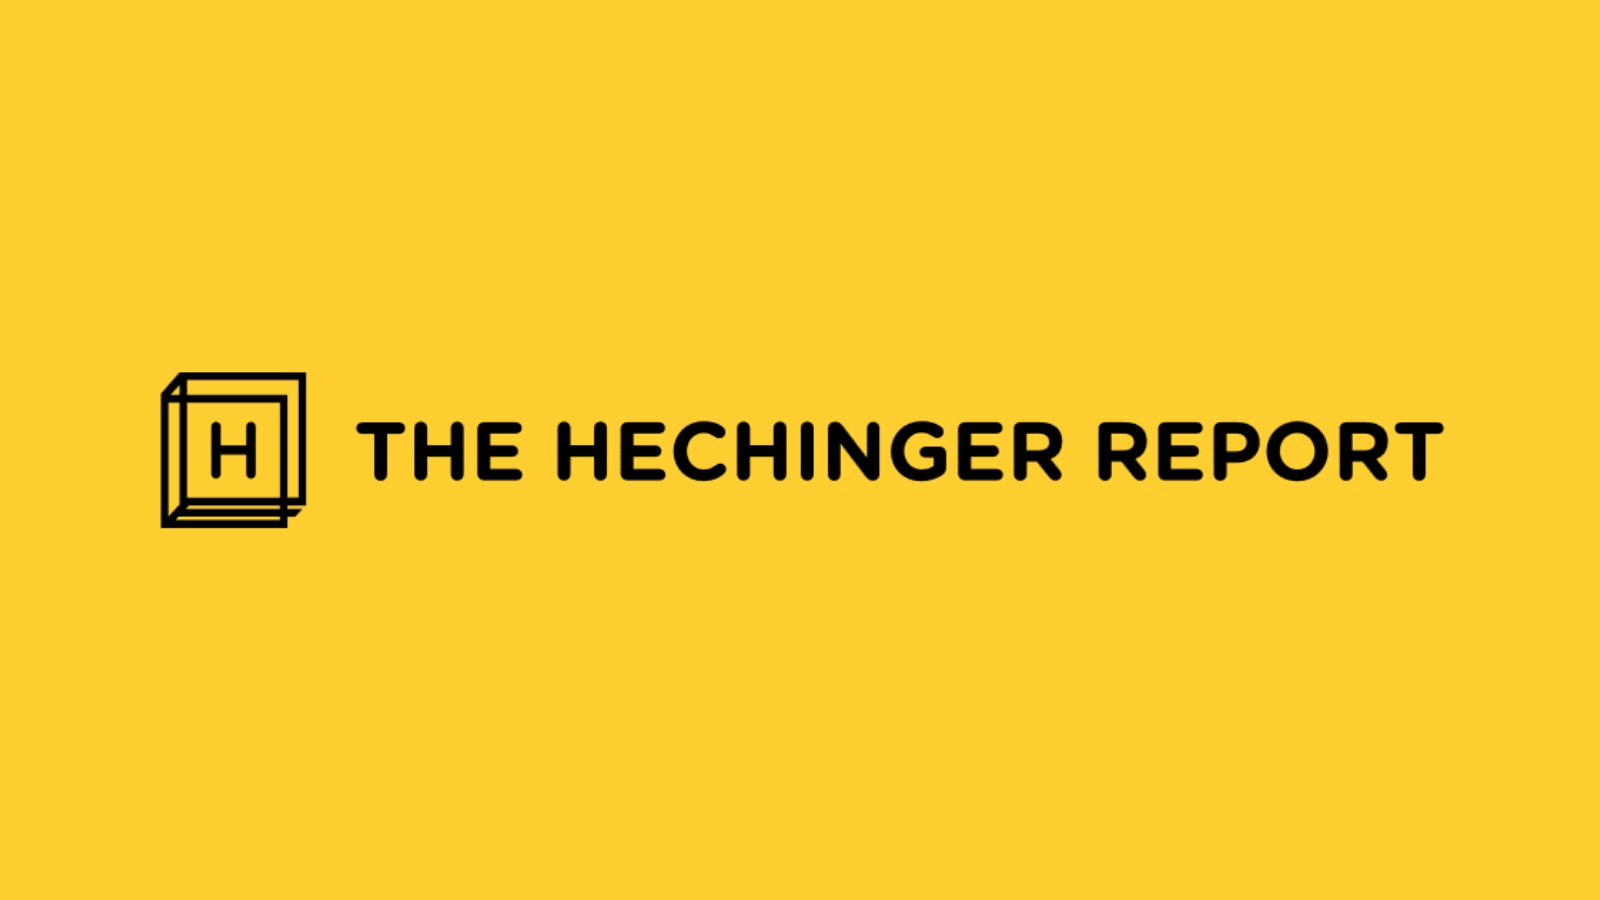 The Hechinger Report logo